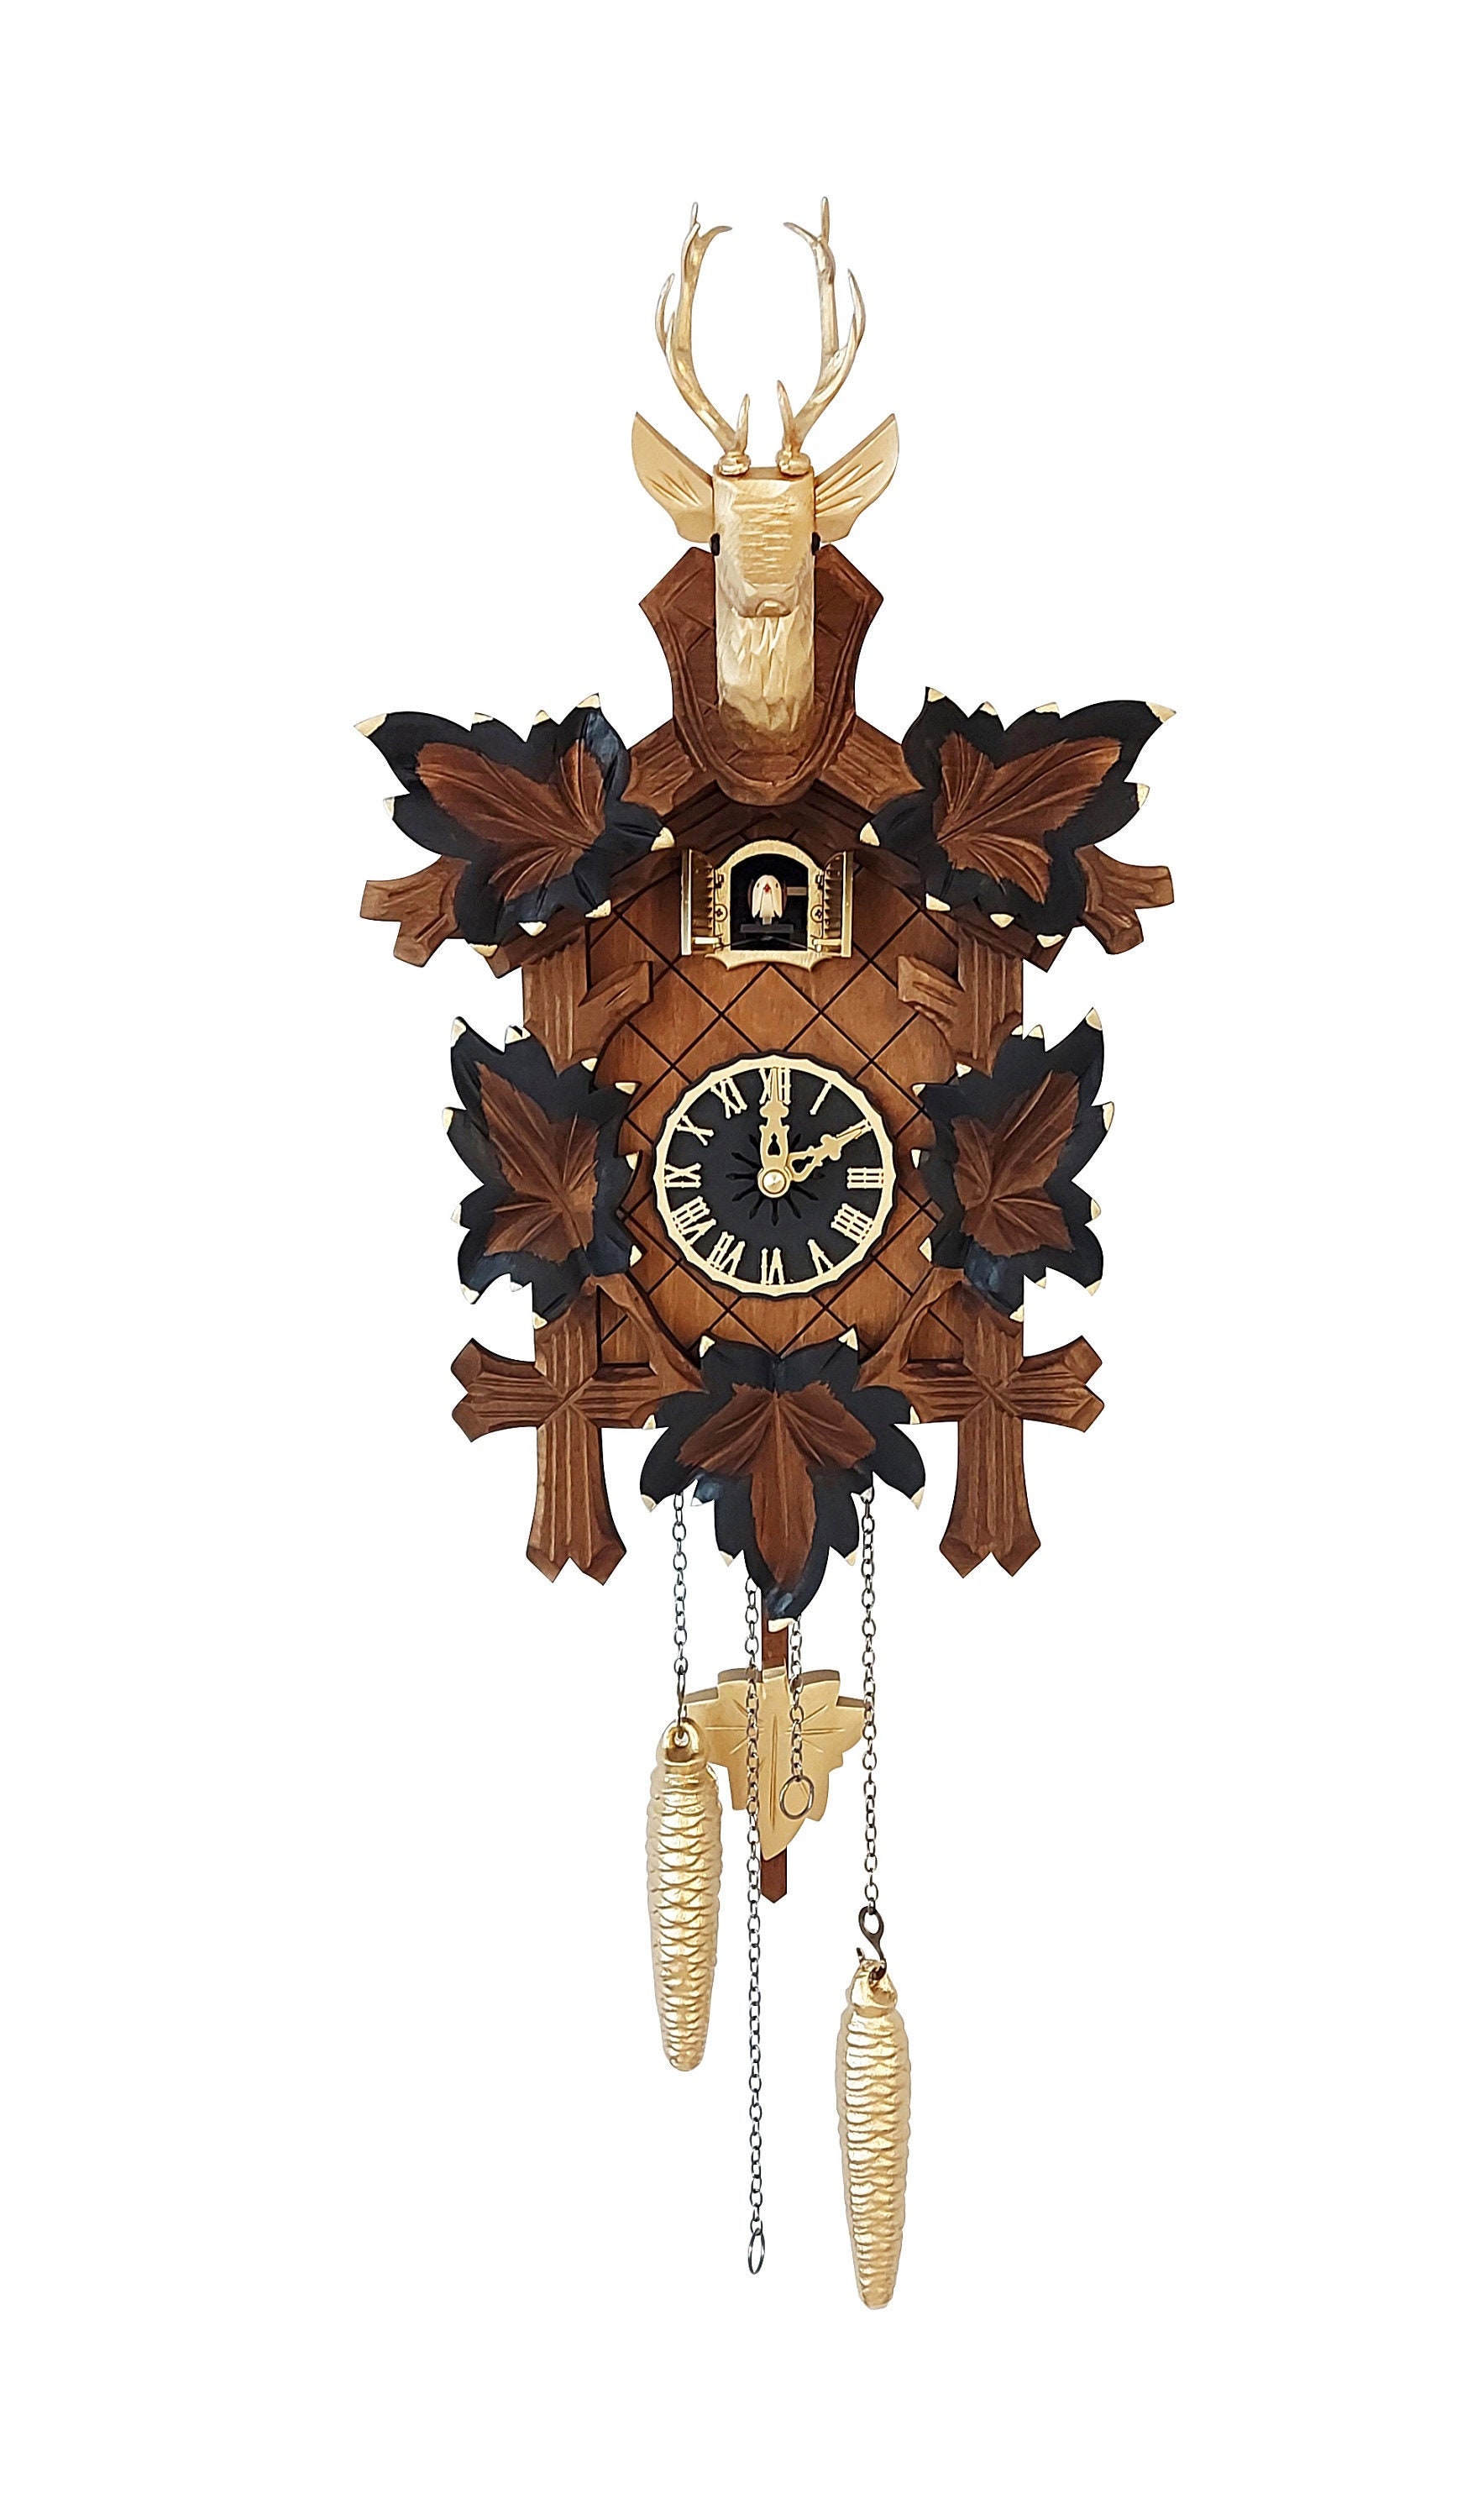 Modern Cuckoo Clock Original From Germany - Etsy